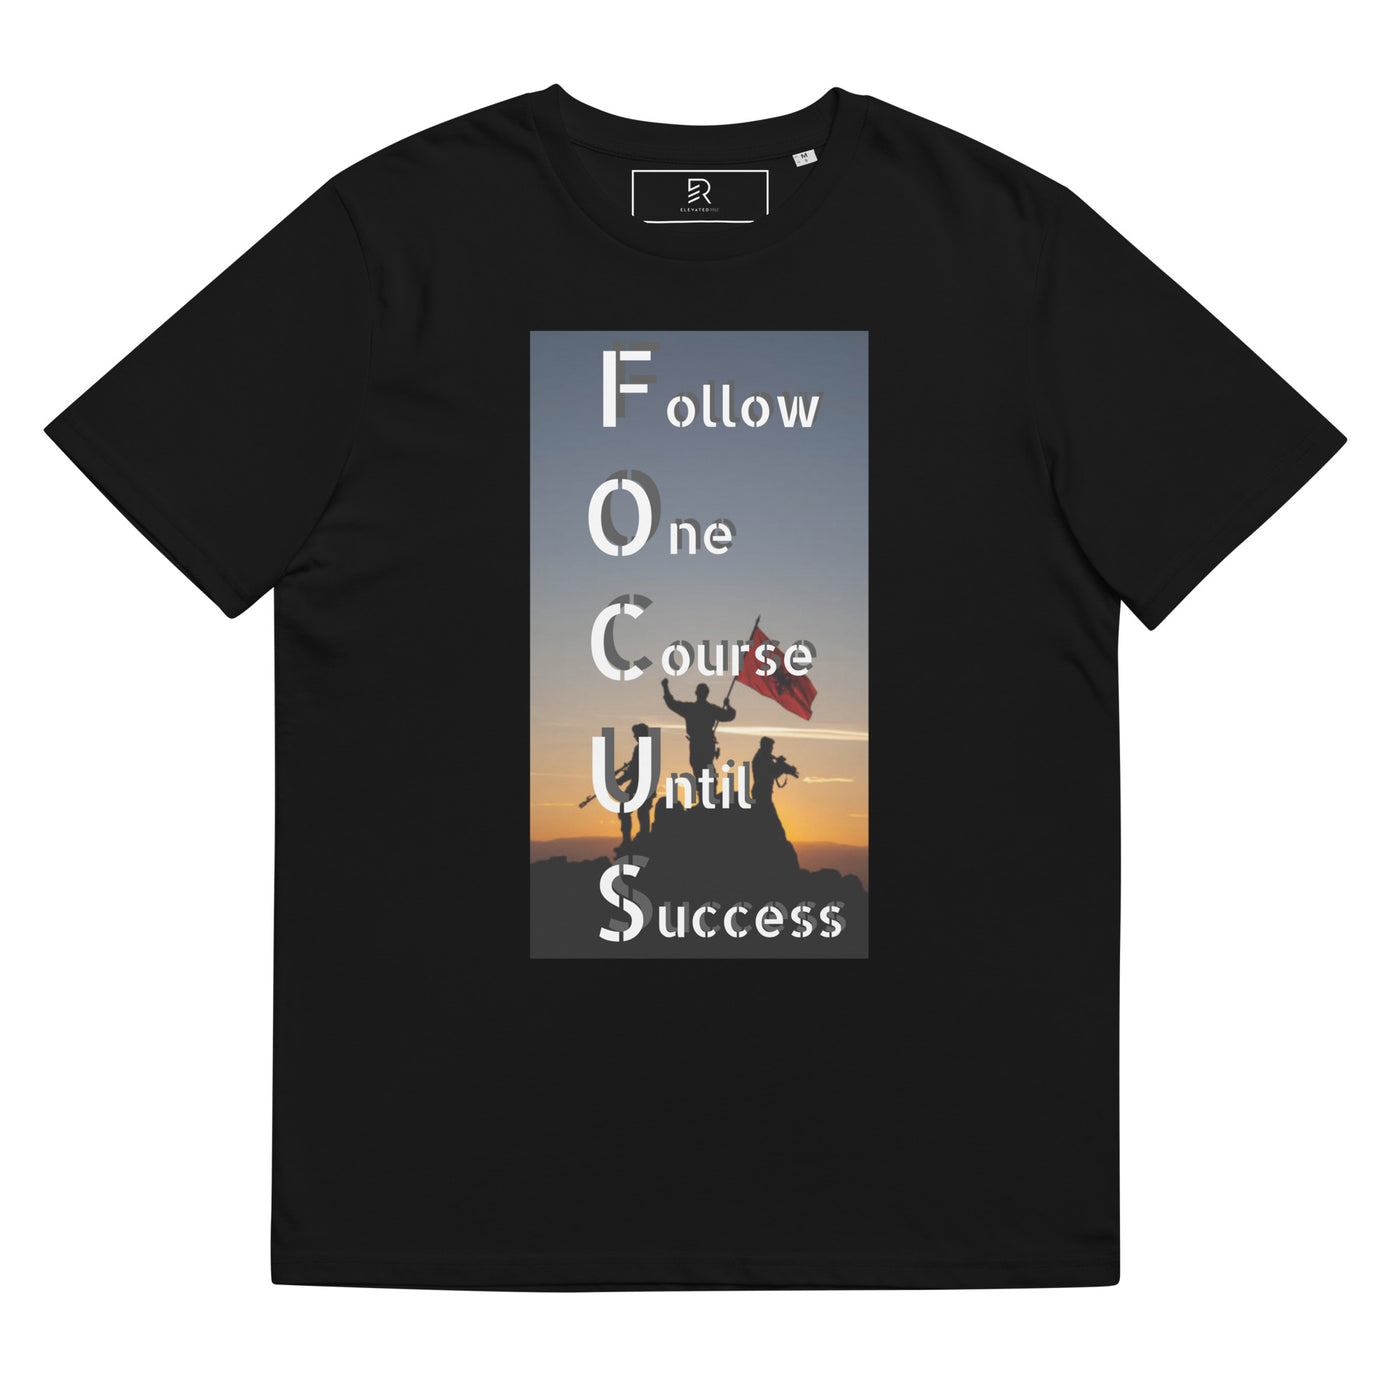 Men's Organic Black Cotton T-Shirt - Focus Success